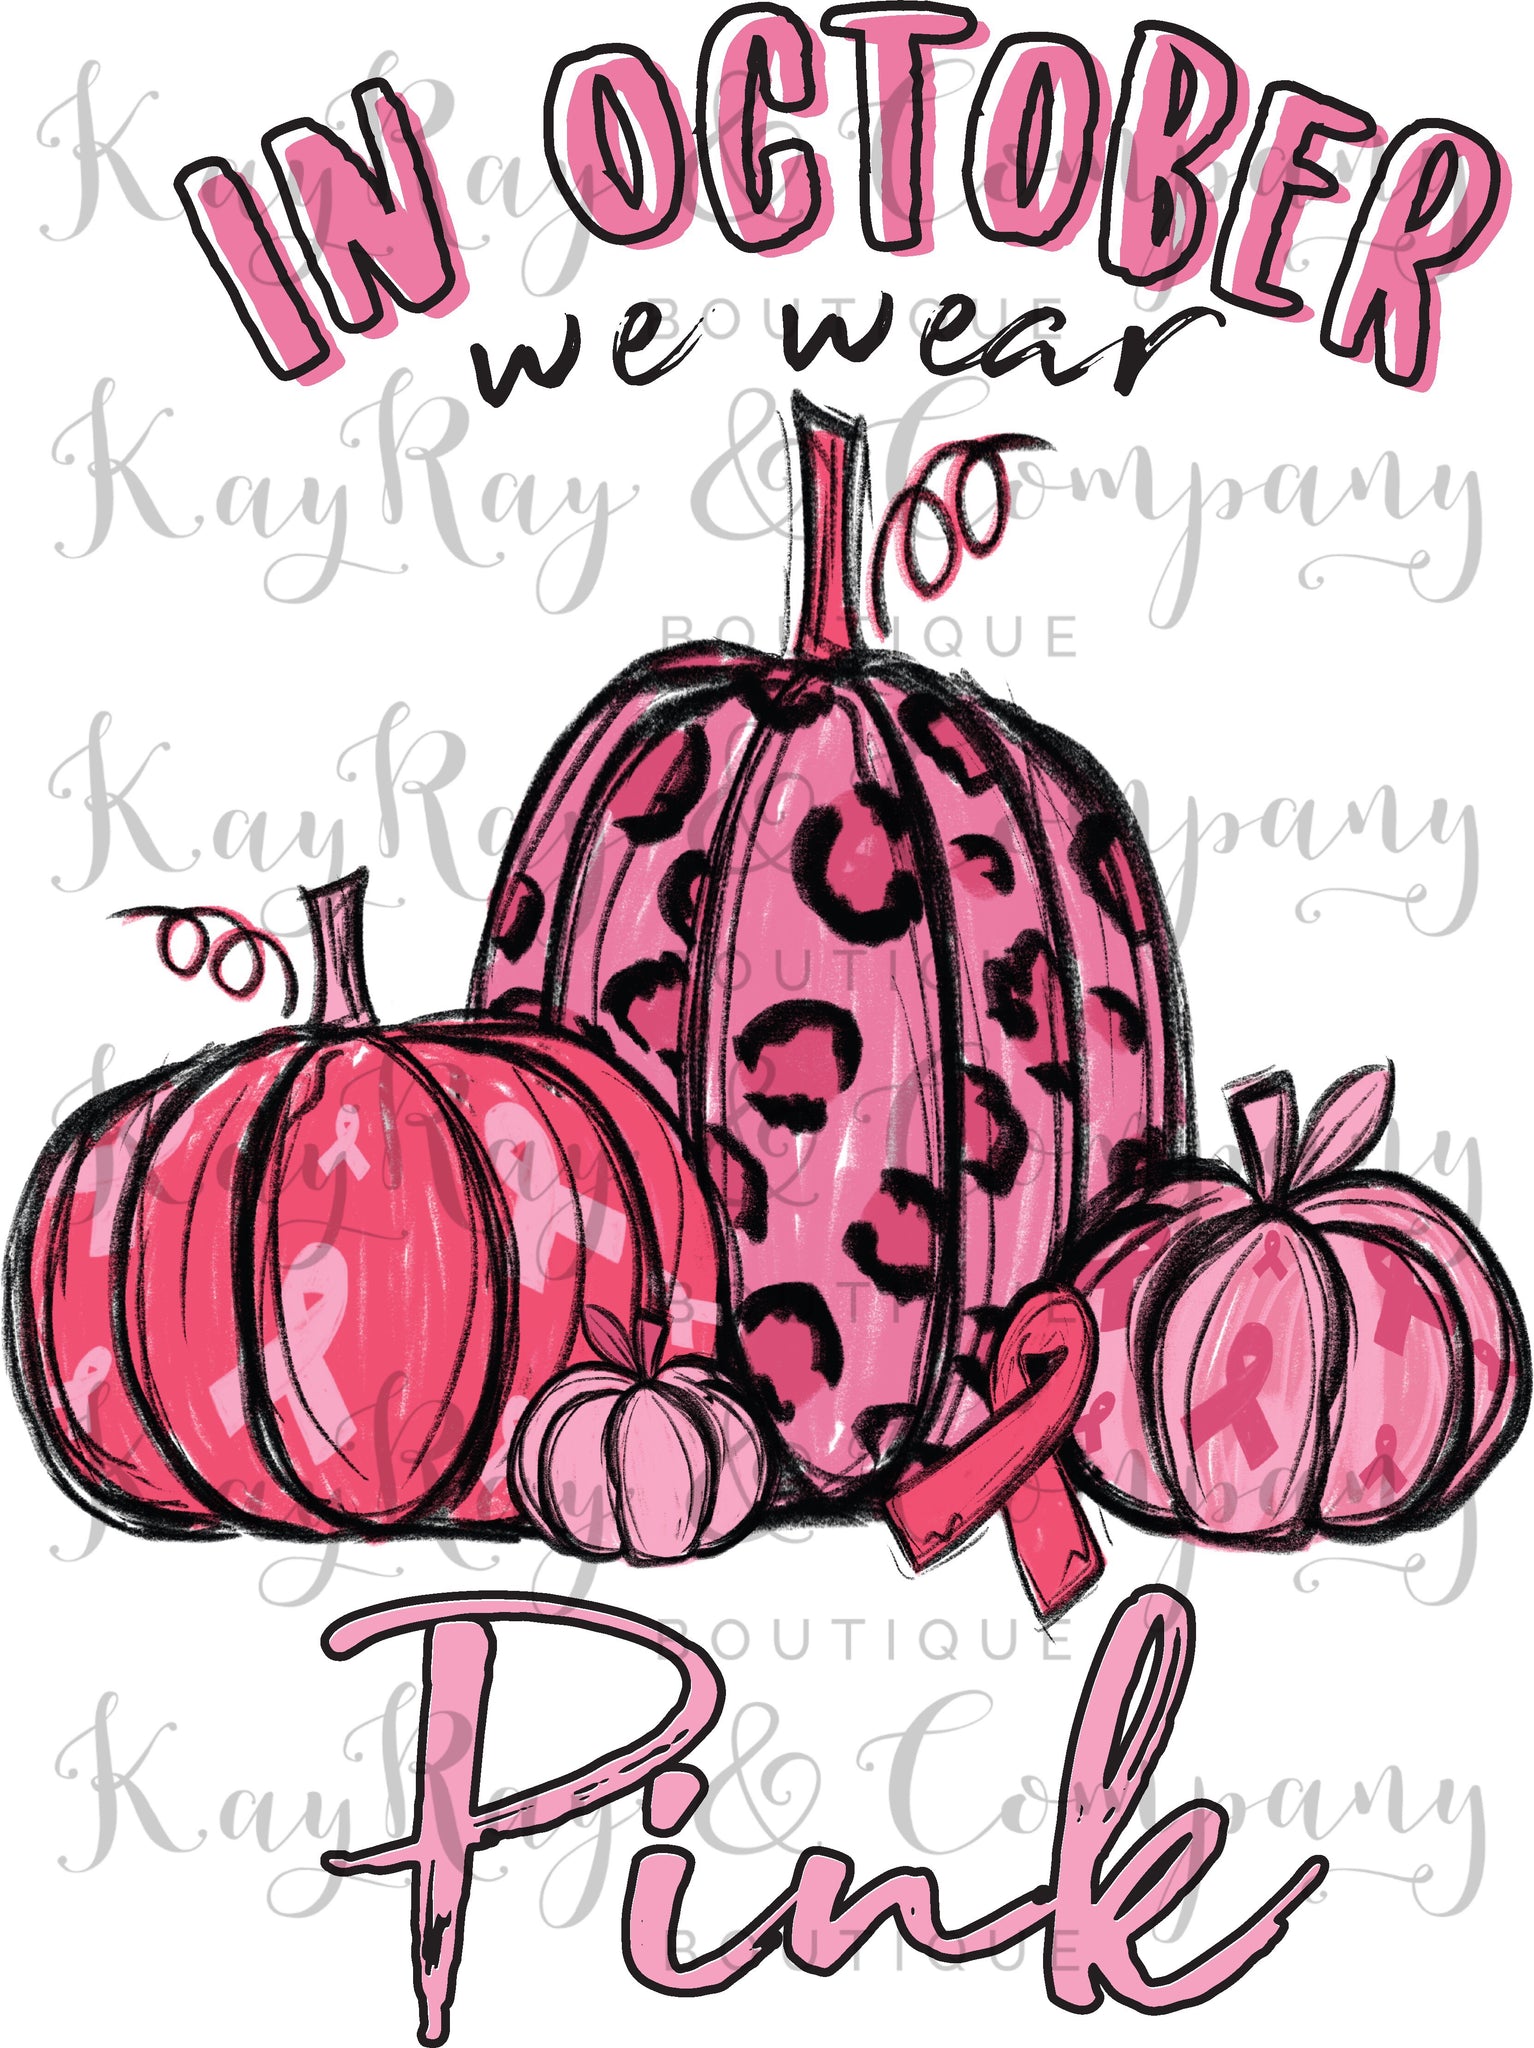 In October we wear pink leopard pumpkin sublimation Transfer